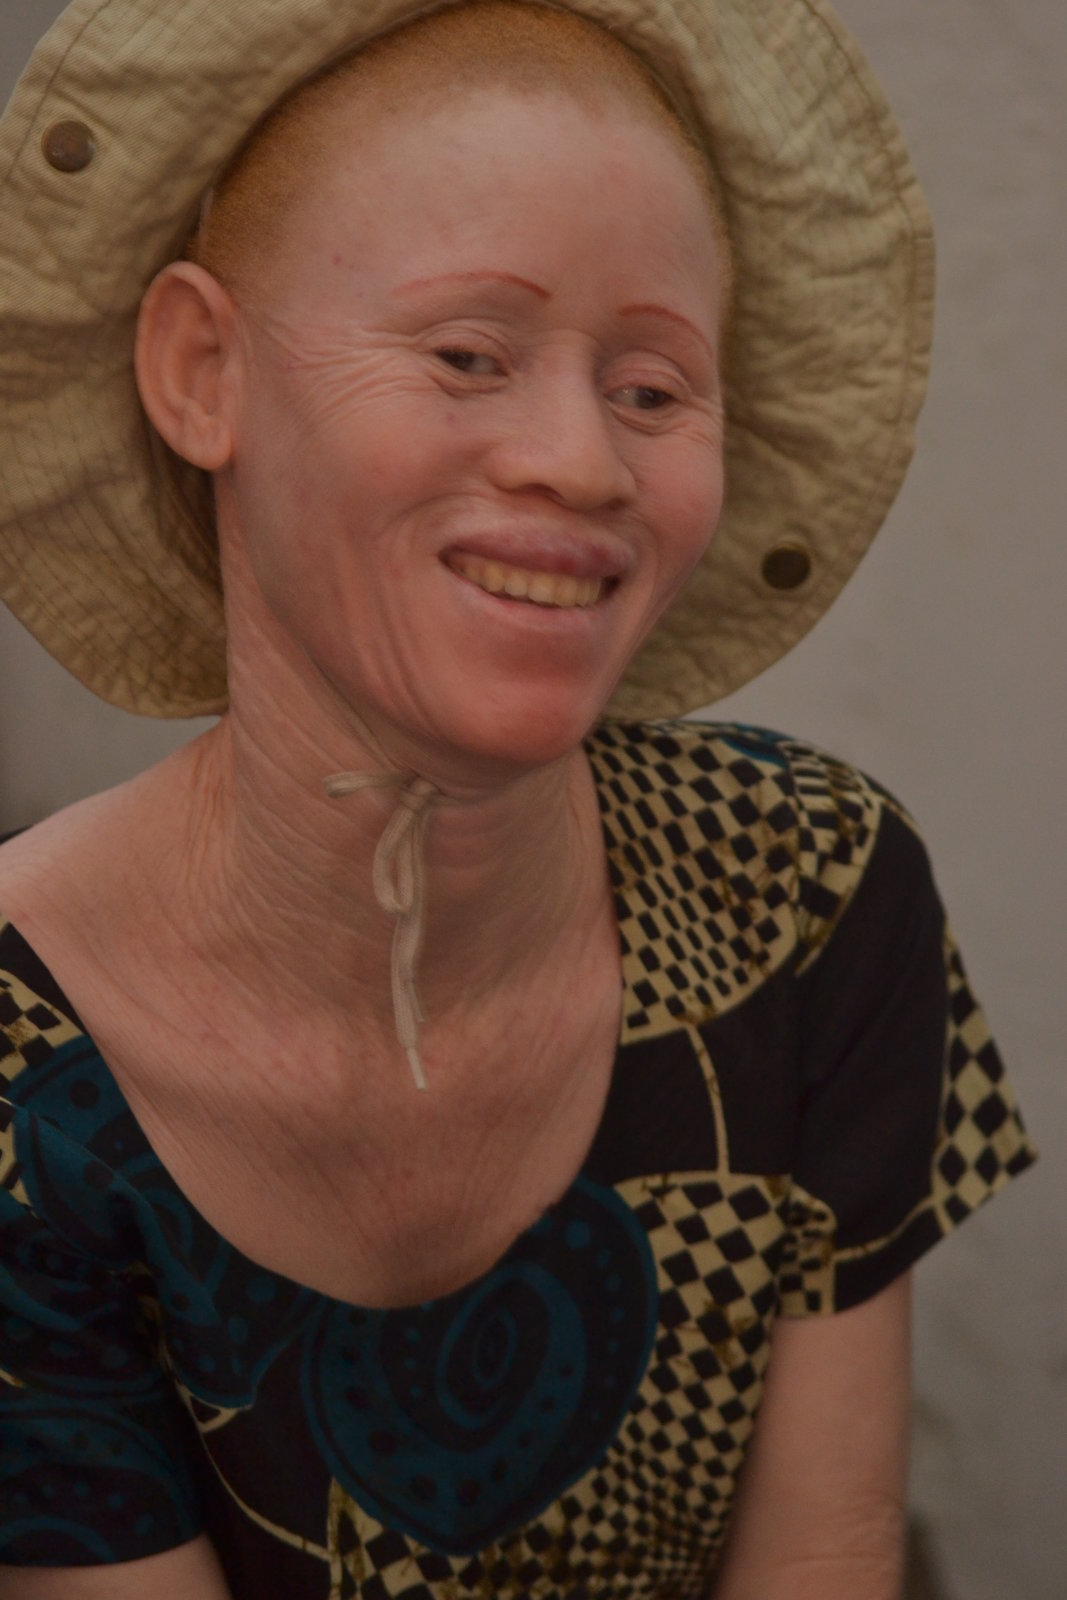 A Smile For Albinos In Tanzania